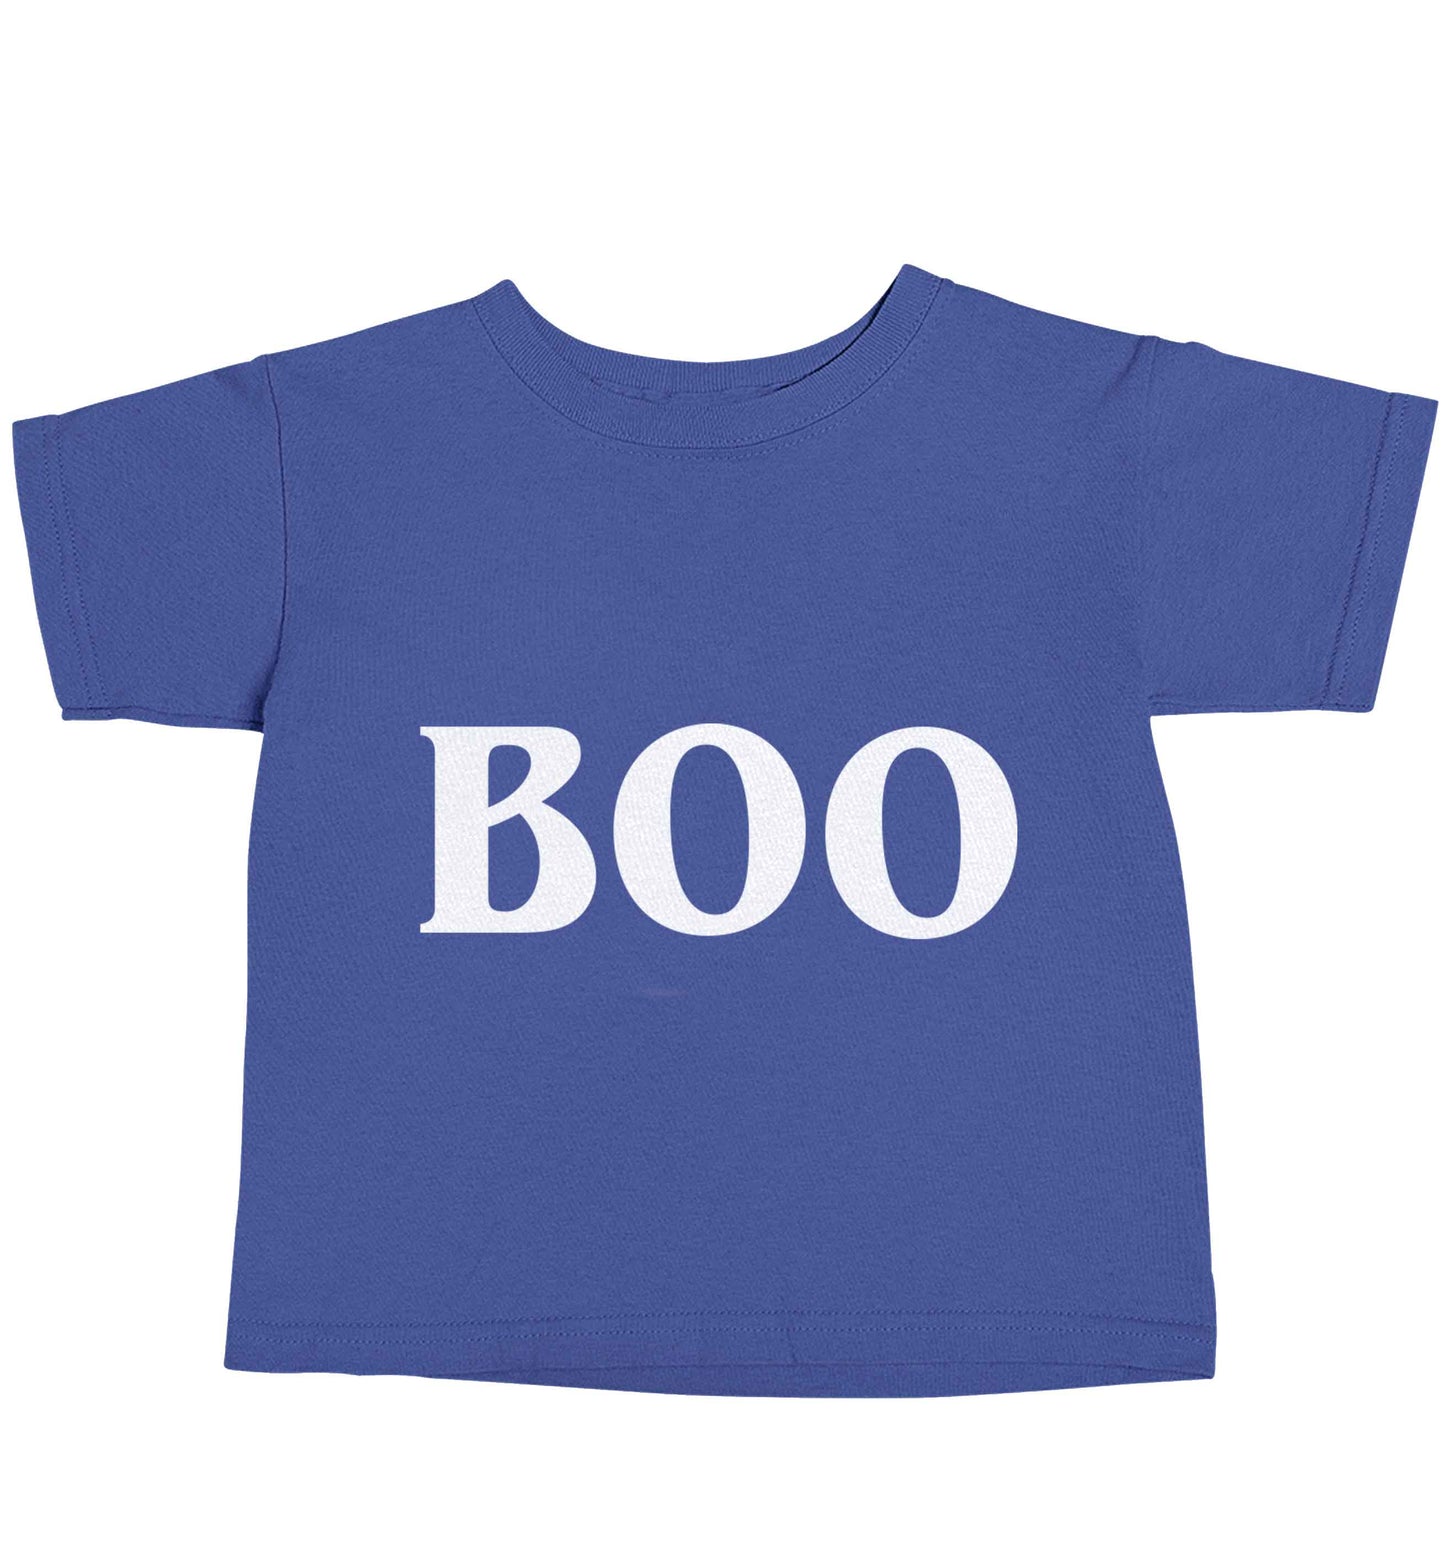 Boo blue baby toddler Tshirt 2 Years